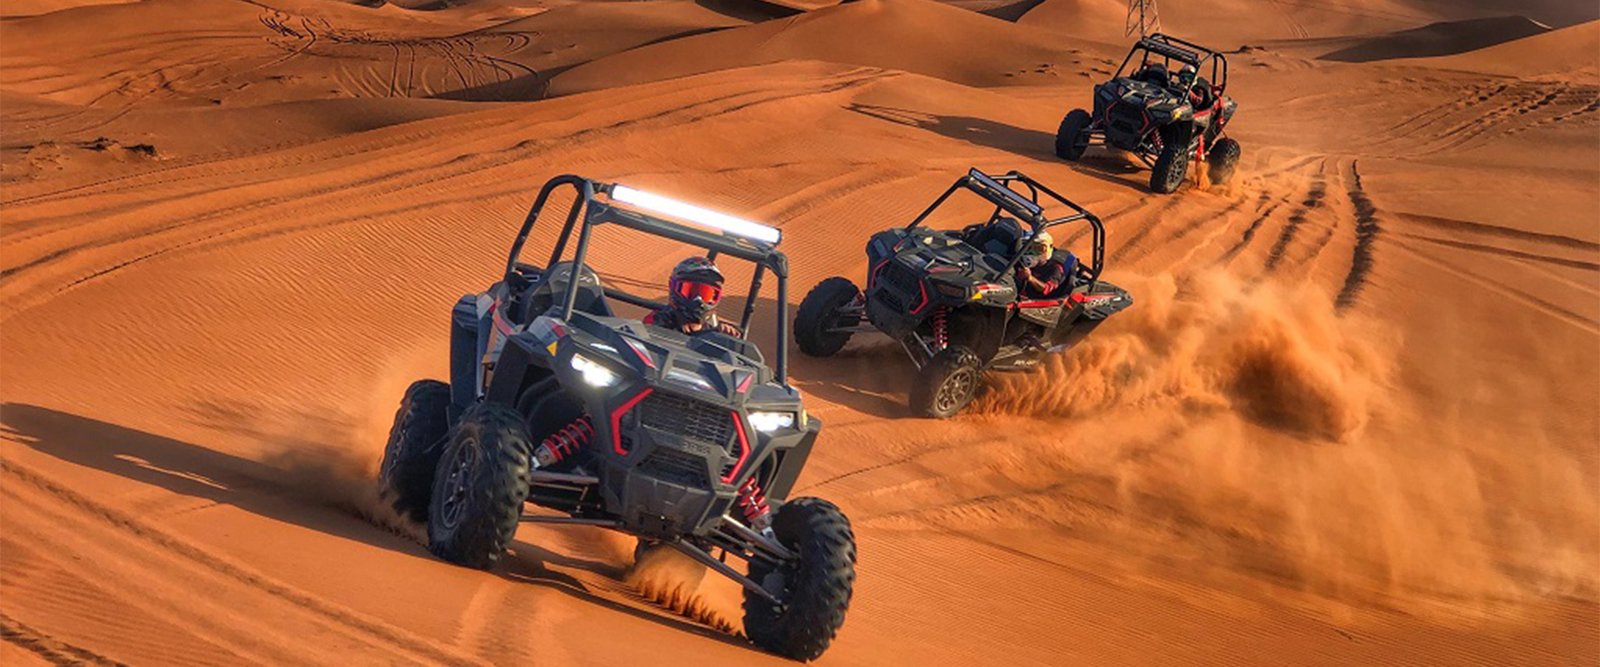 Discover Sand Dunes with Dune Buggy Rental Dubai